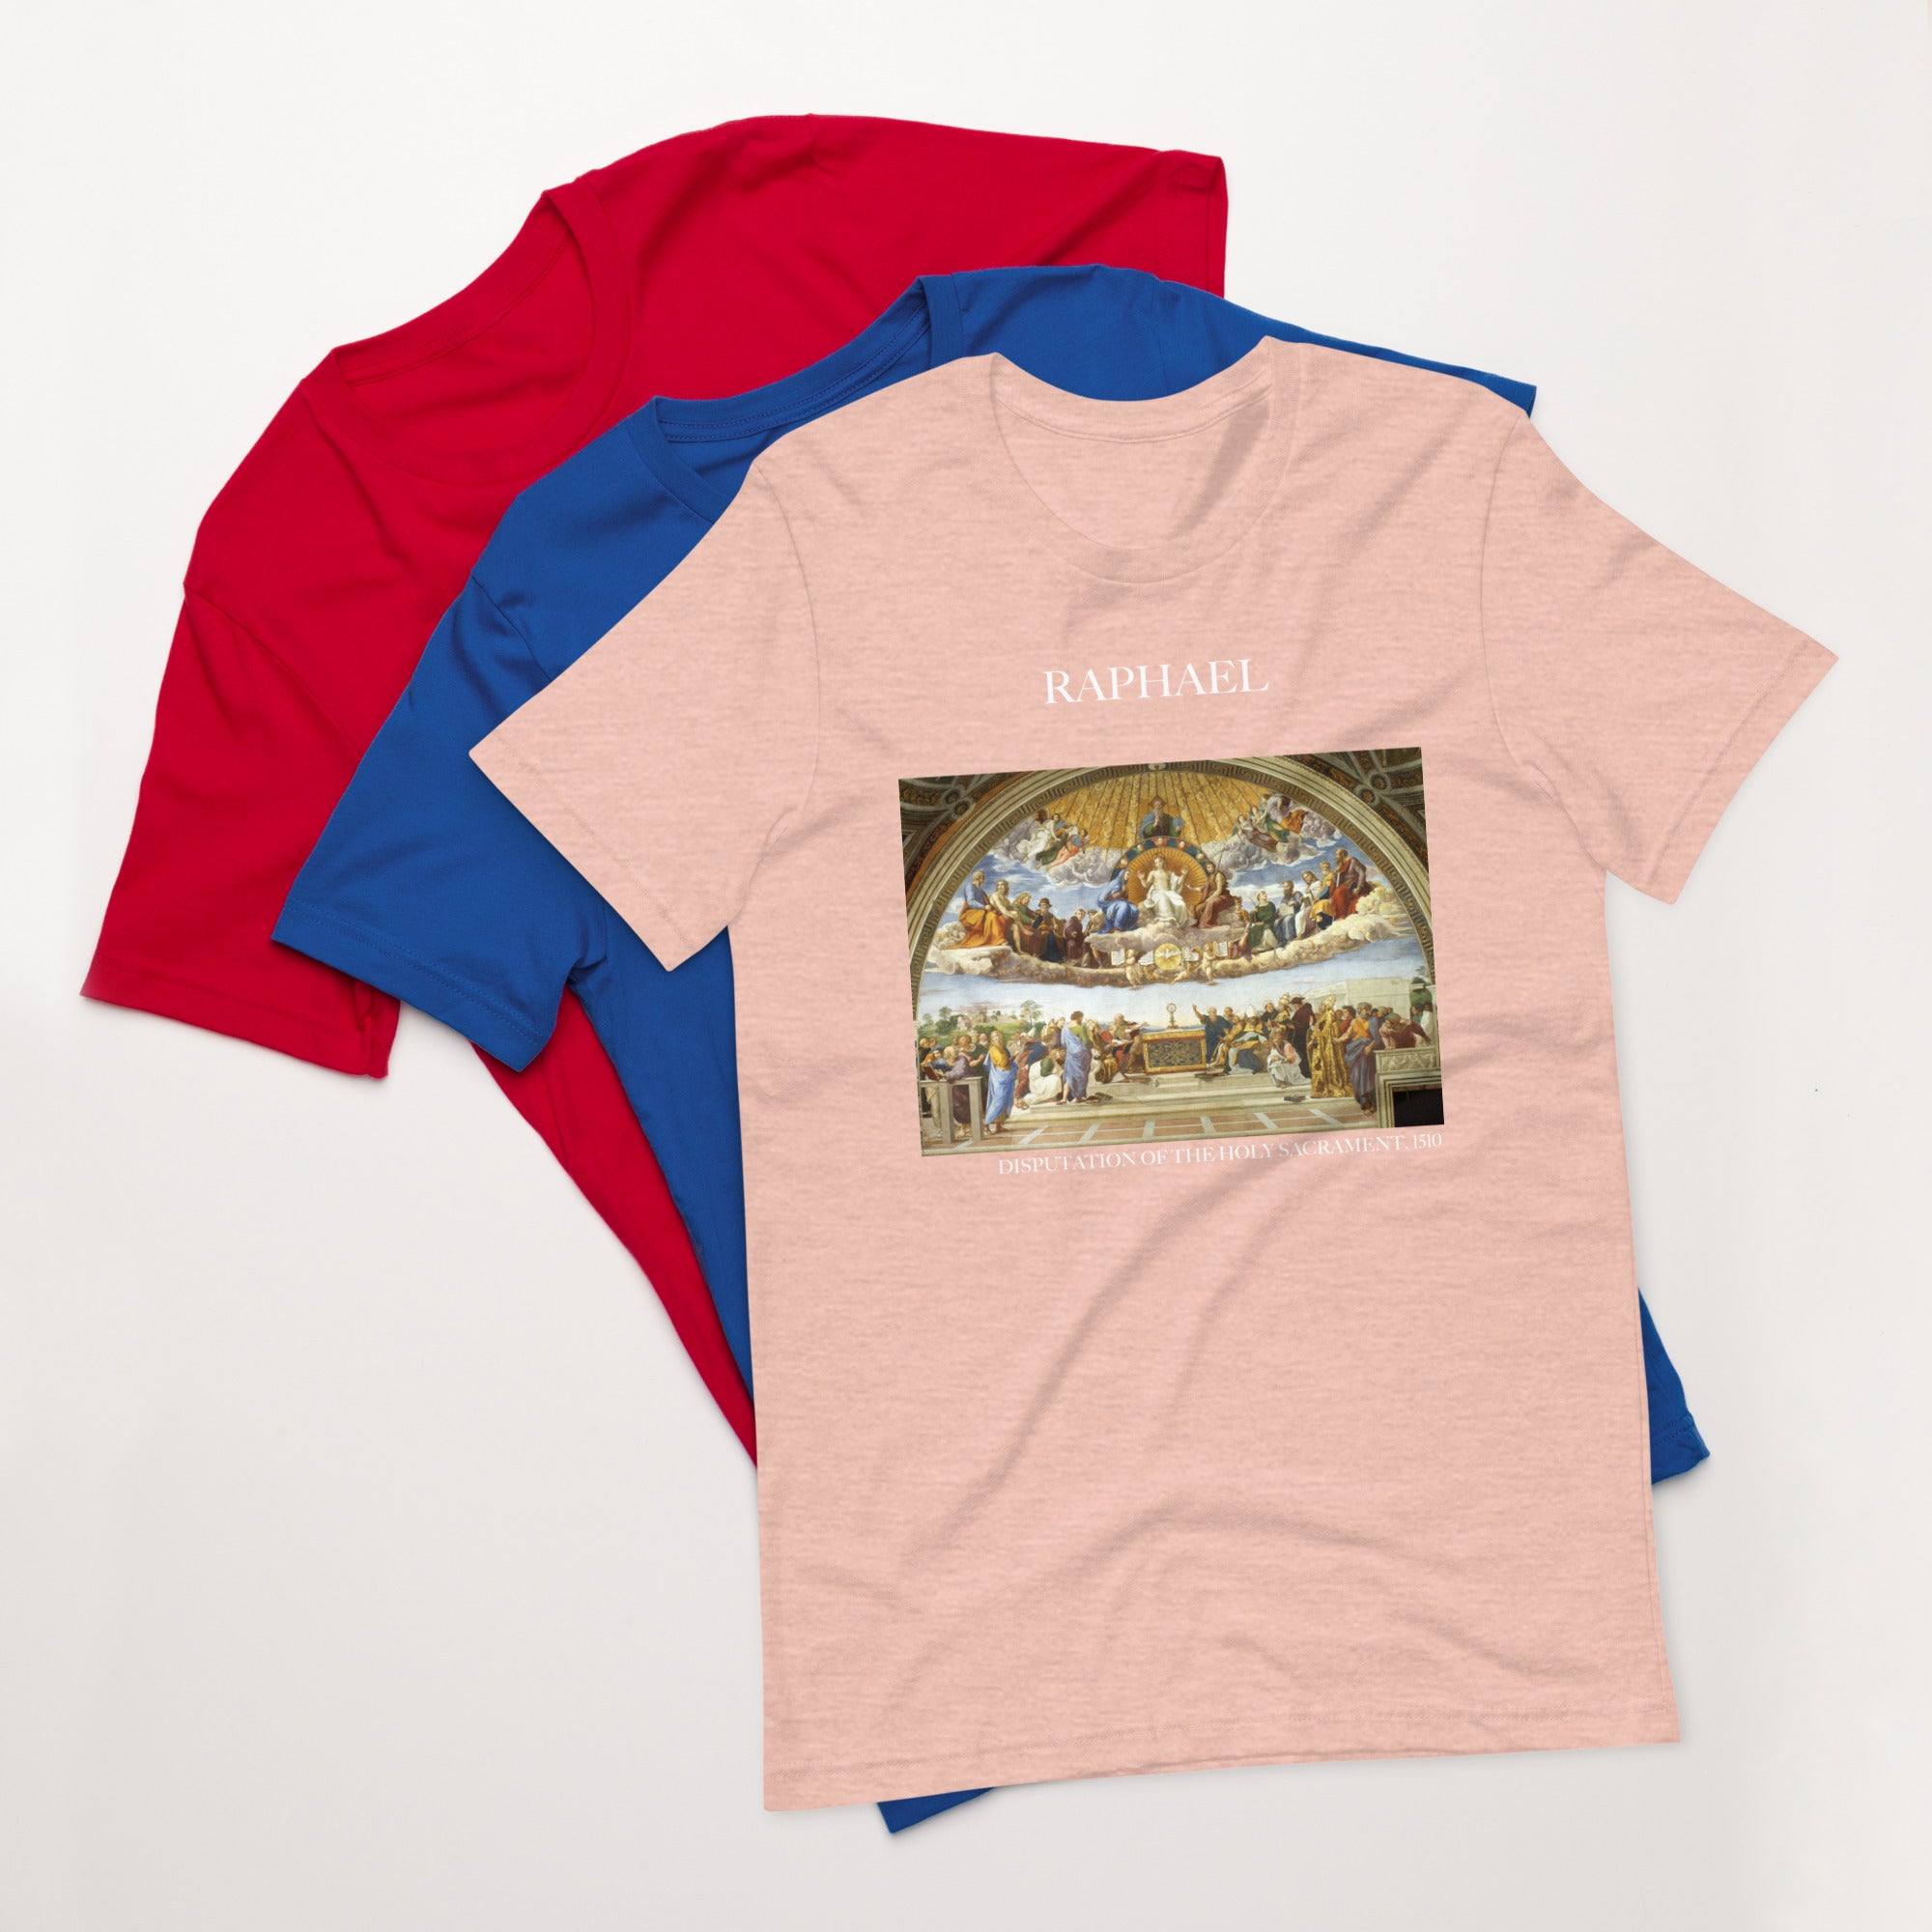 Raphael 'Disputation of the Holy Sacrament' Famous Painting T-Shirt | Unisex Classic Art Tee